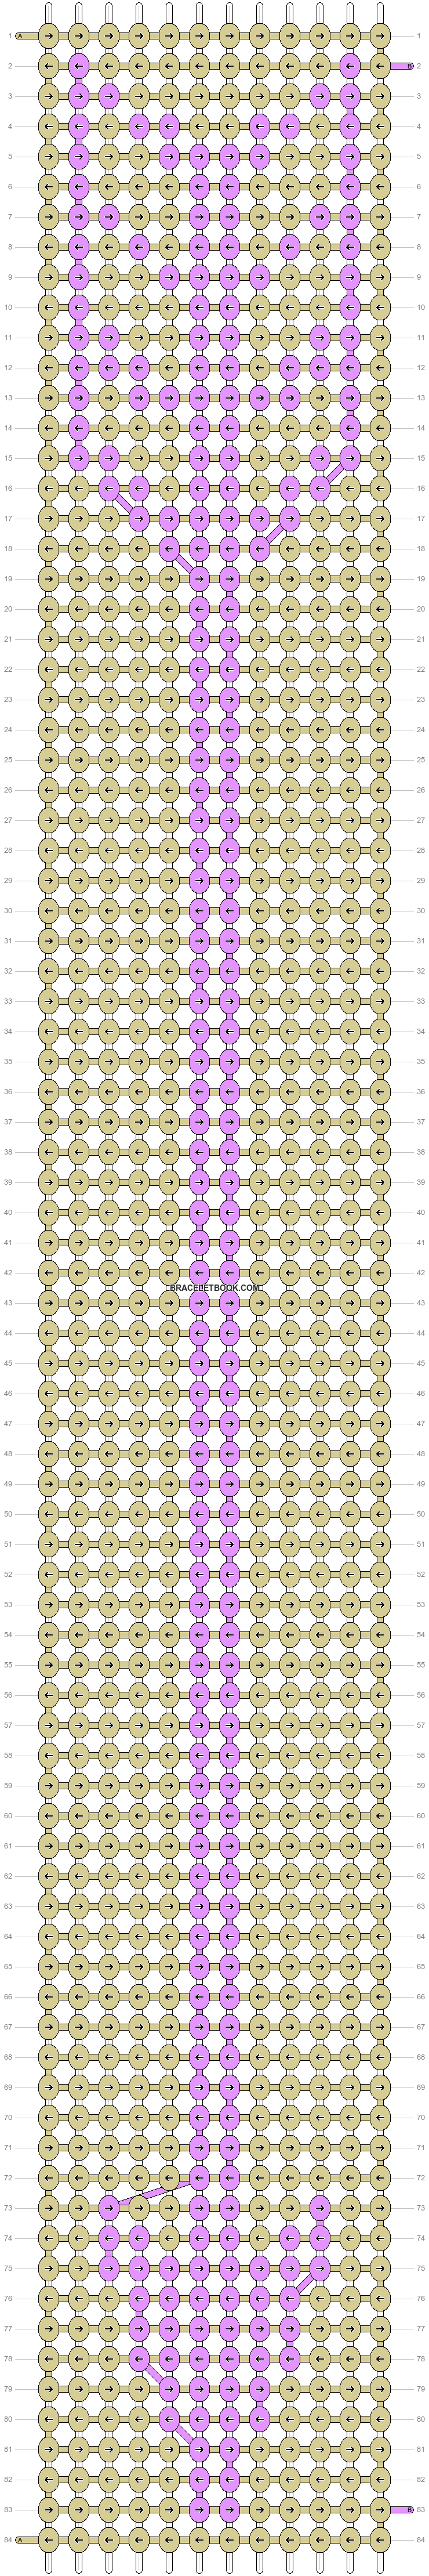 Alpha pattern #15857 variation #39479 pattern